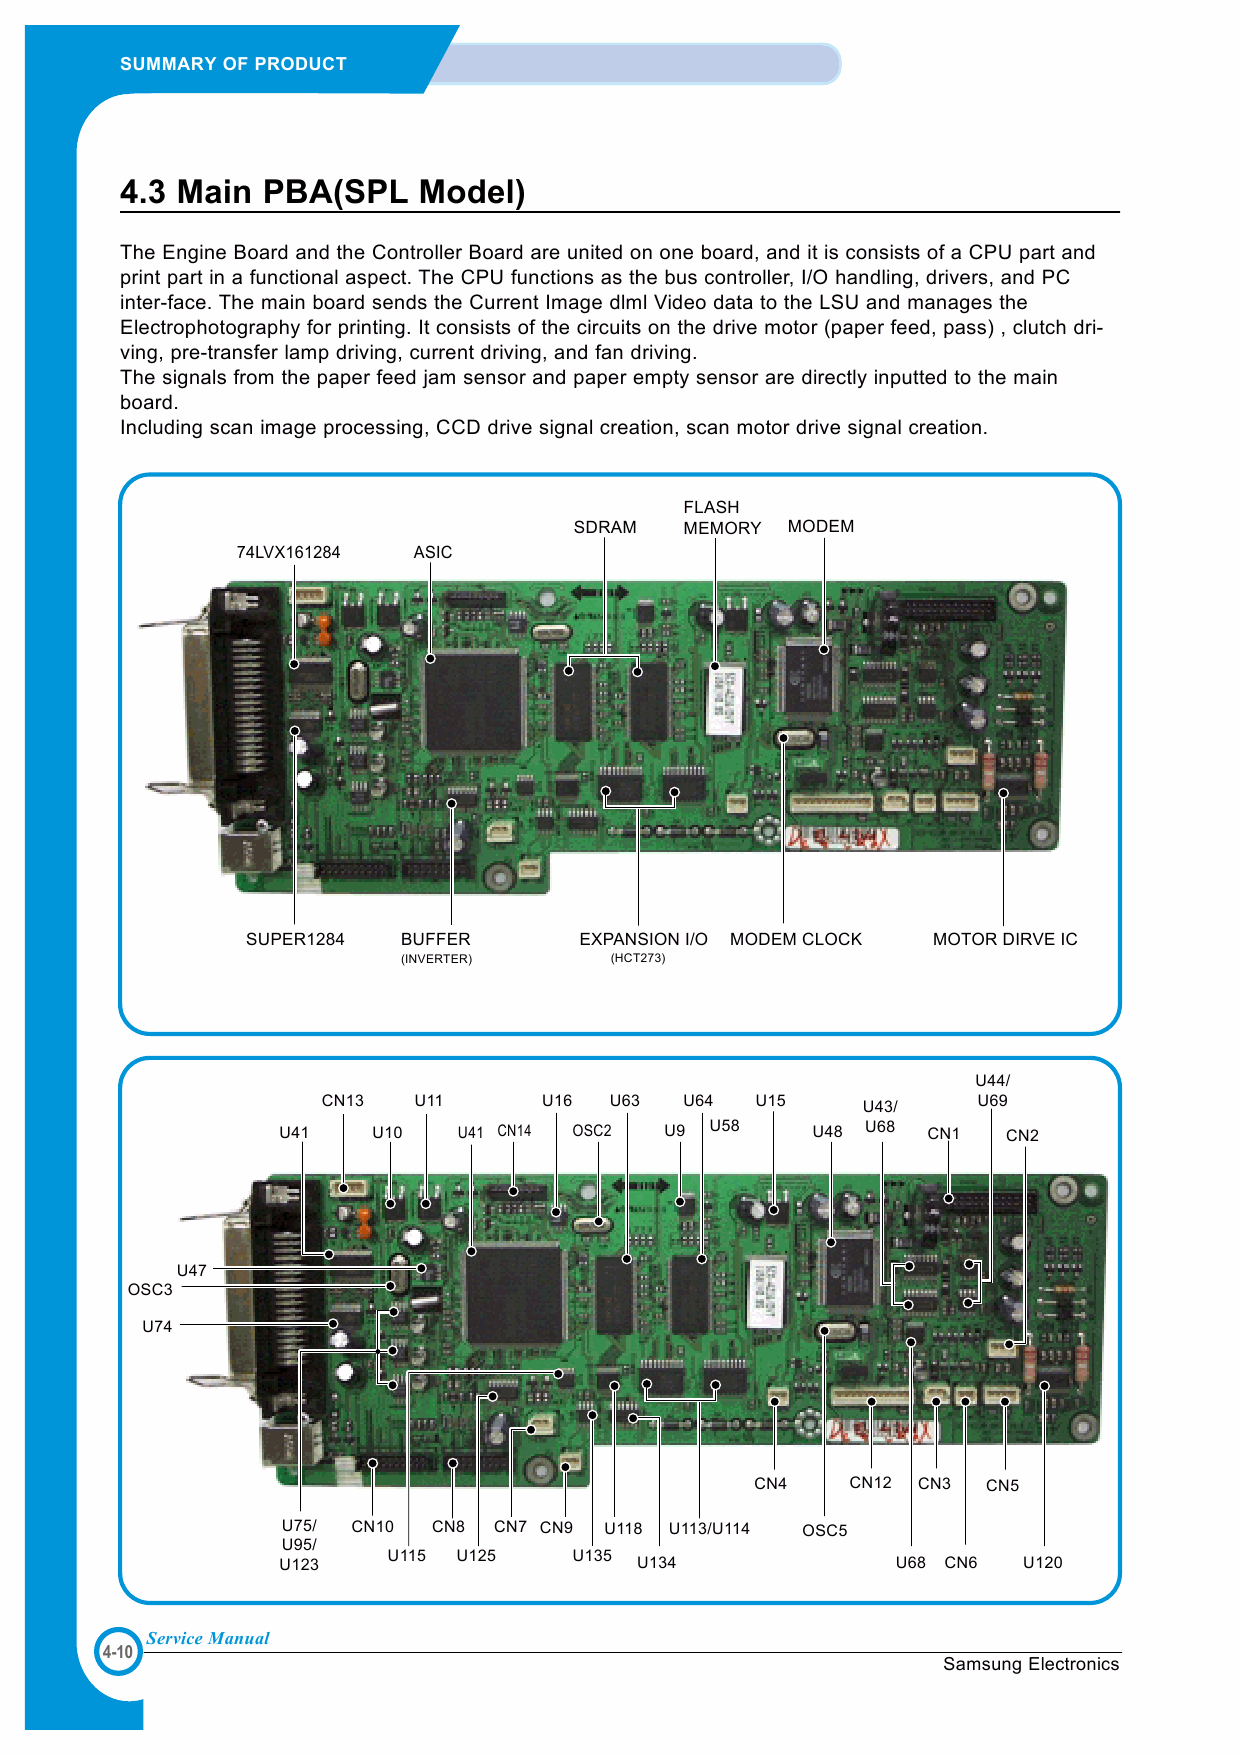 Samsung Digital-Laser-MFP SCX-4216F 4116 4016 Parts and Service Manual-2